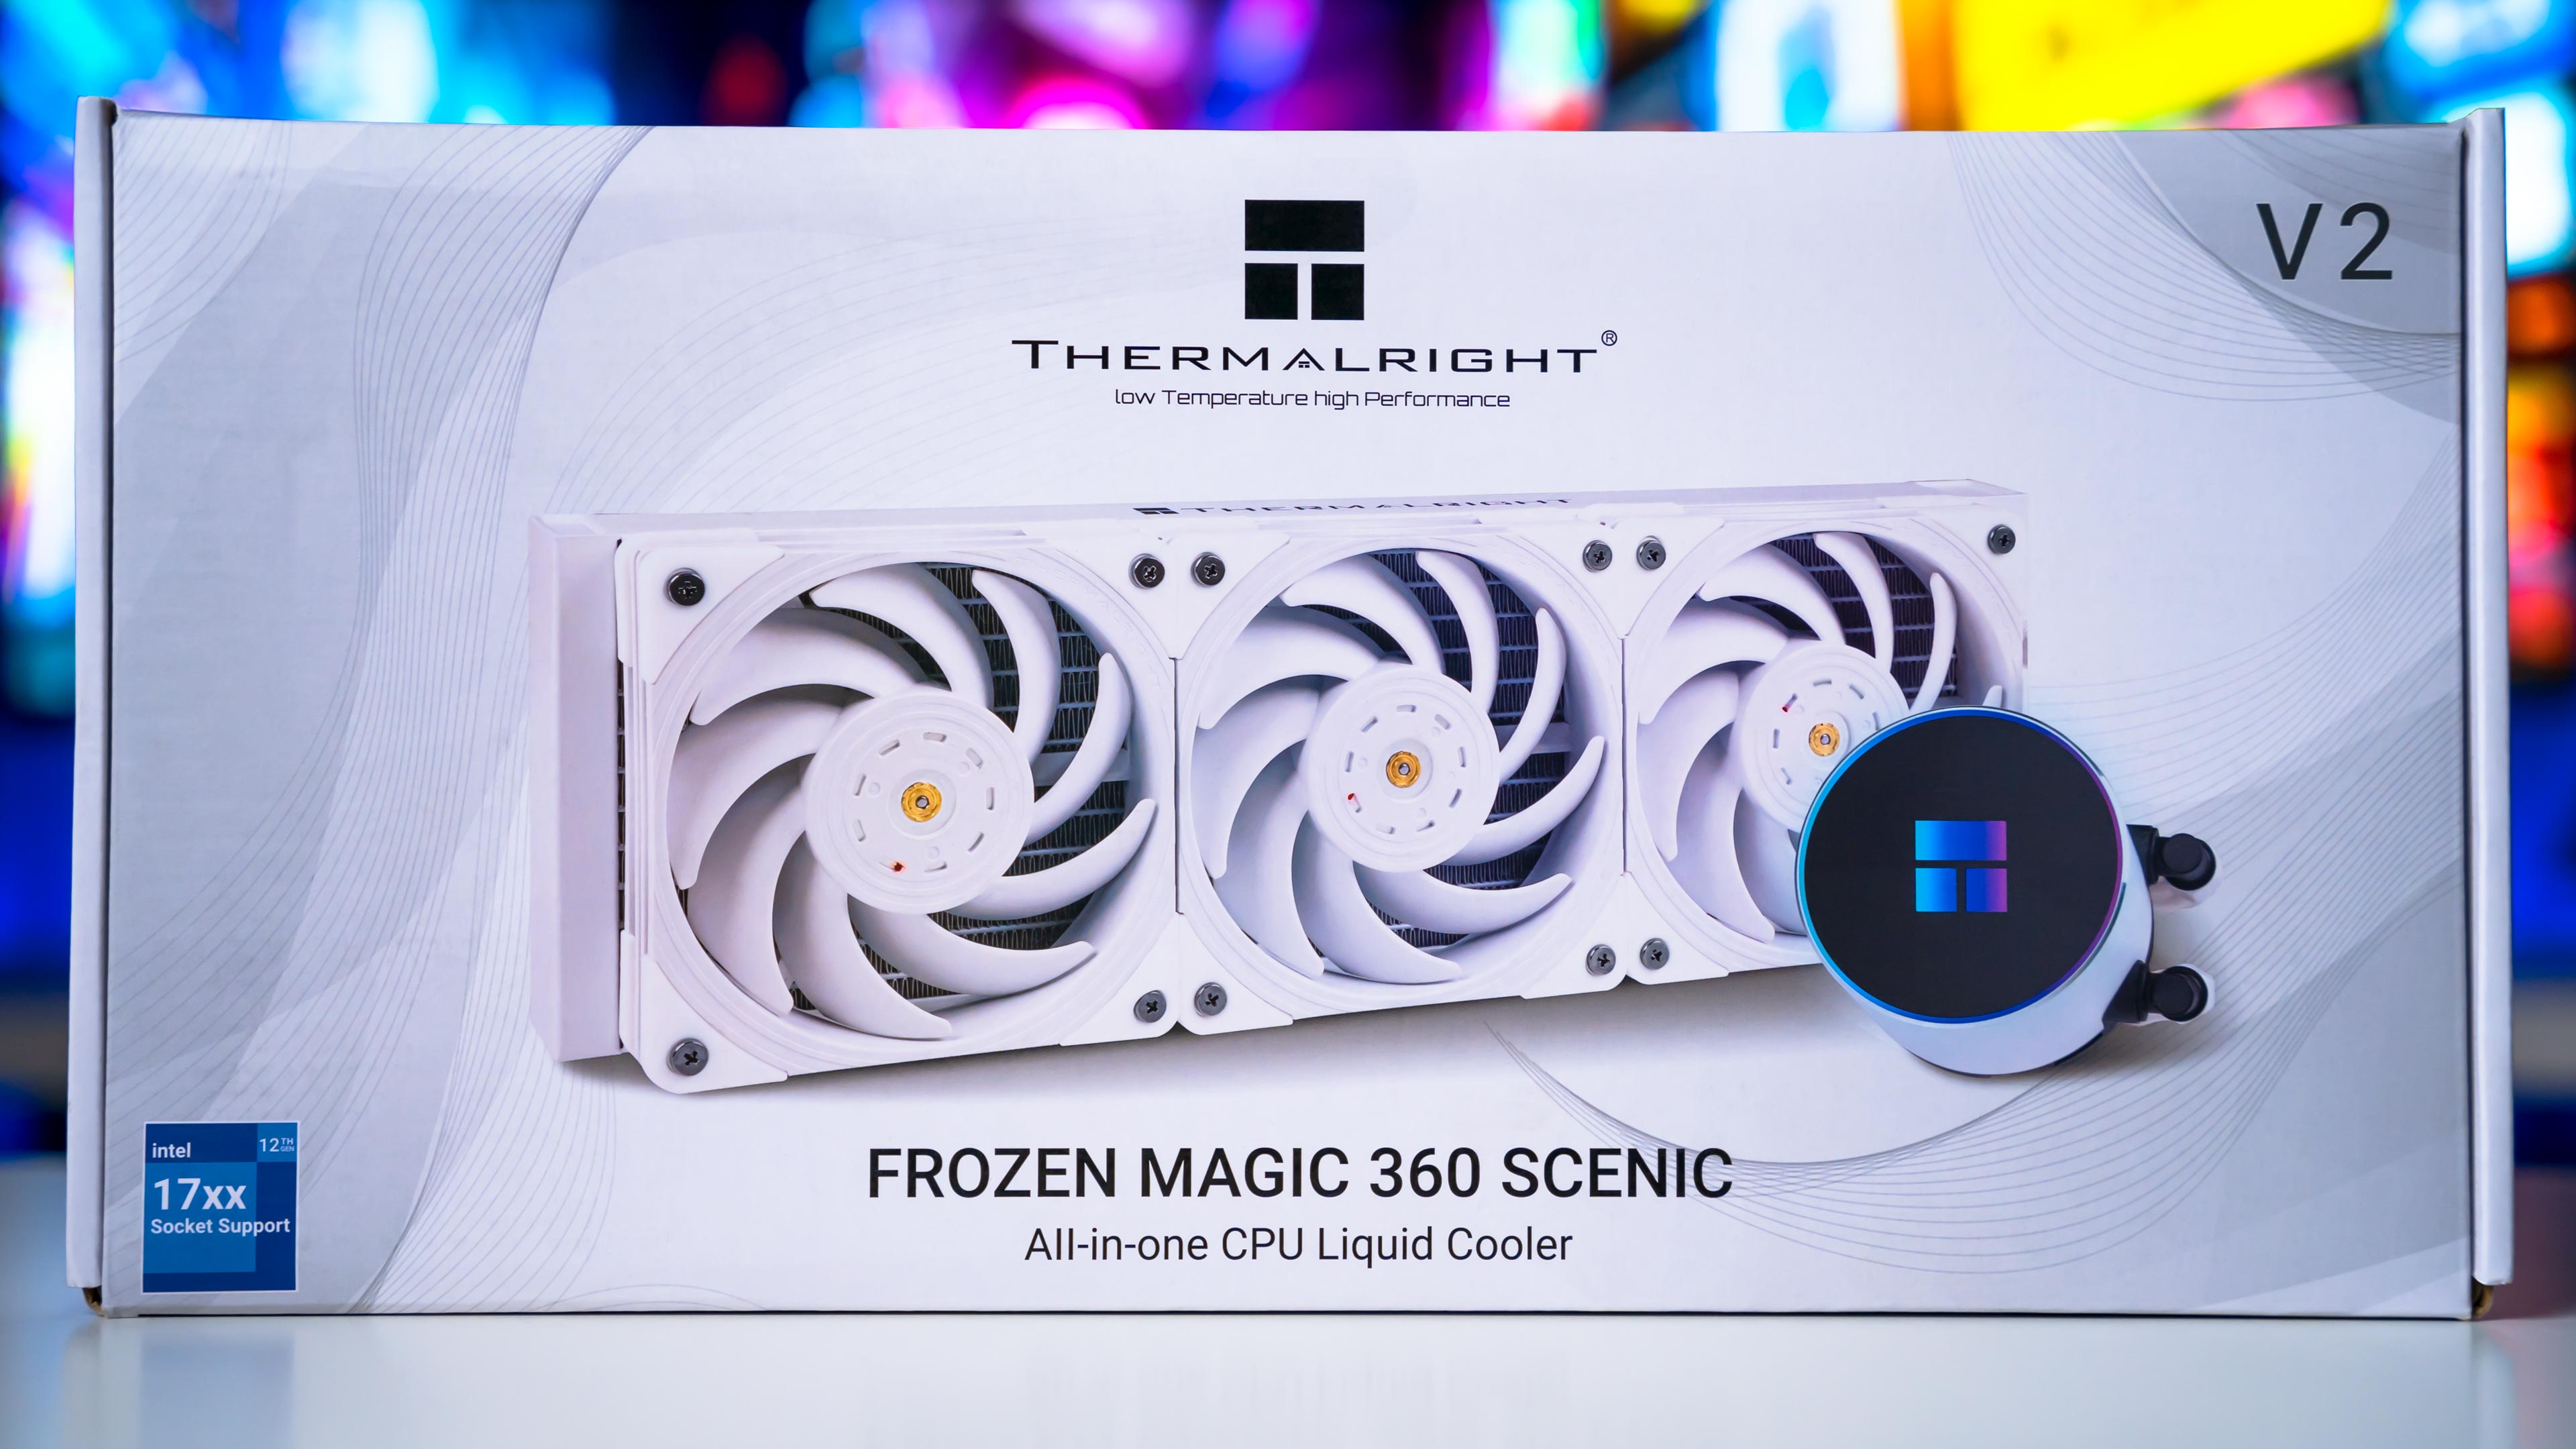 Thermalright Frozen Magic 360 Scenic V2 Box (1)